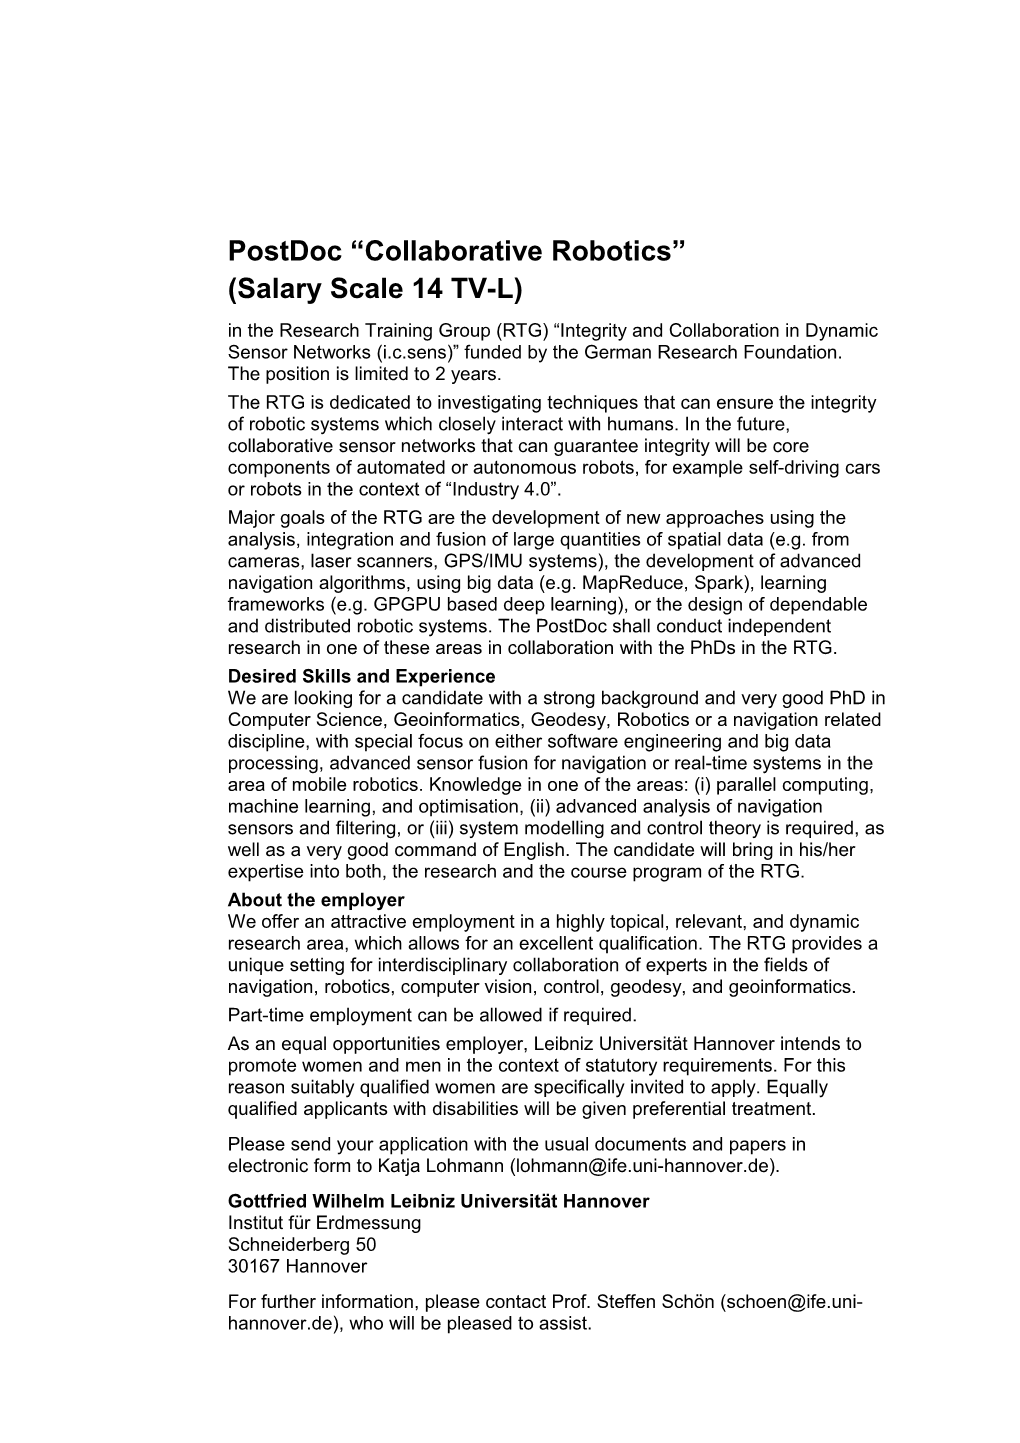 Postdoc Collaborative Robotics (Salary Scale 14 TV-L)